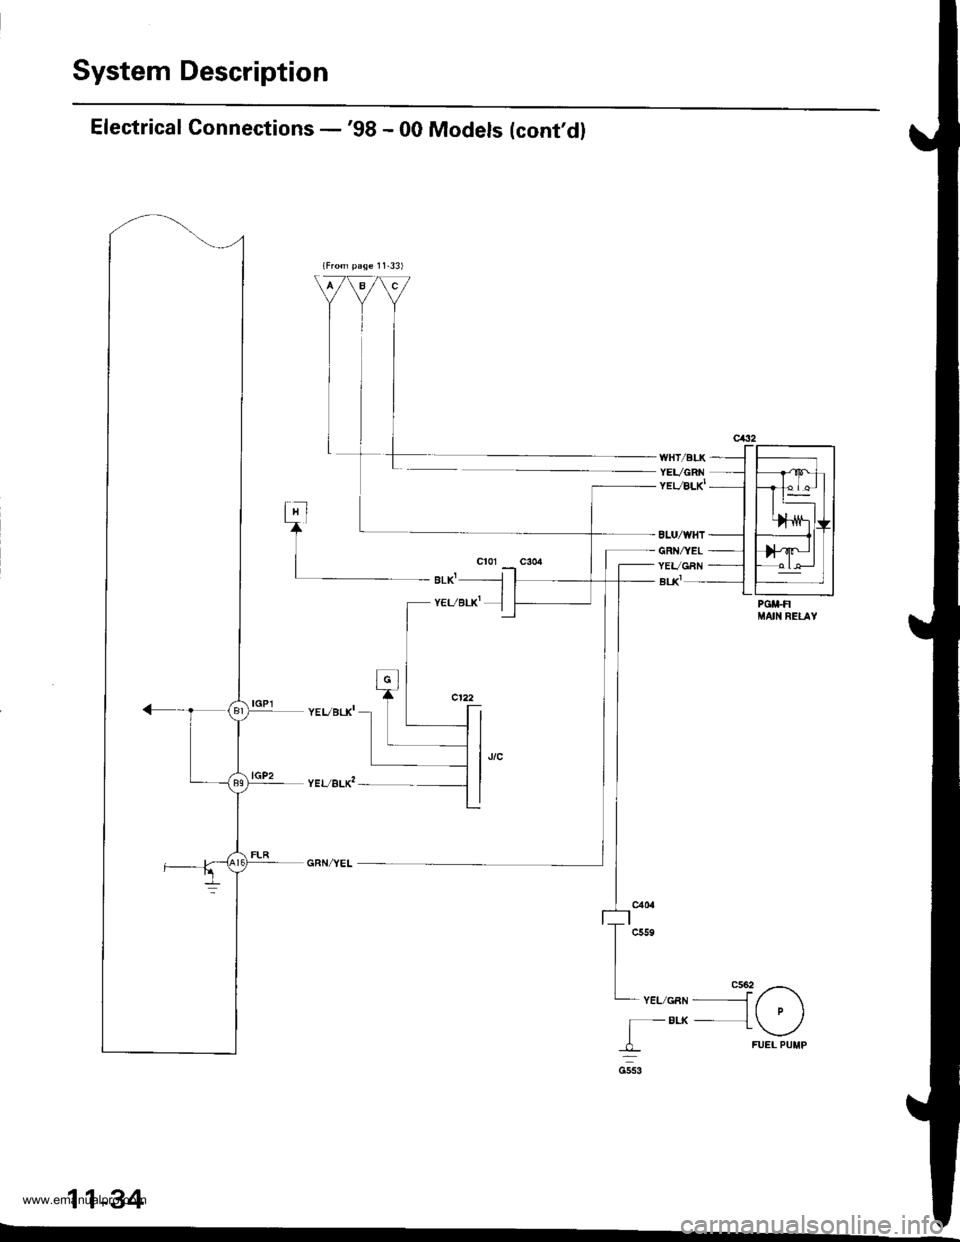 HONDA CR-V 1999 RD1-RD3 / 1.G User Guide 
System Description
Electrical Connections -98 - 00 Models (contdl
PGU.FIMAII{ BEIAY
cssr
cs6-2 ,z-_\-YEL/GBN- 
-f p \-BLx-- l  ./| - "---.,
_L FUEL PUI{P
11-34
www.emanualpro.com  